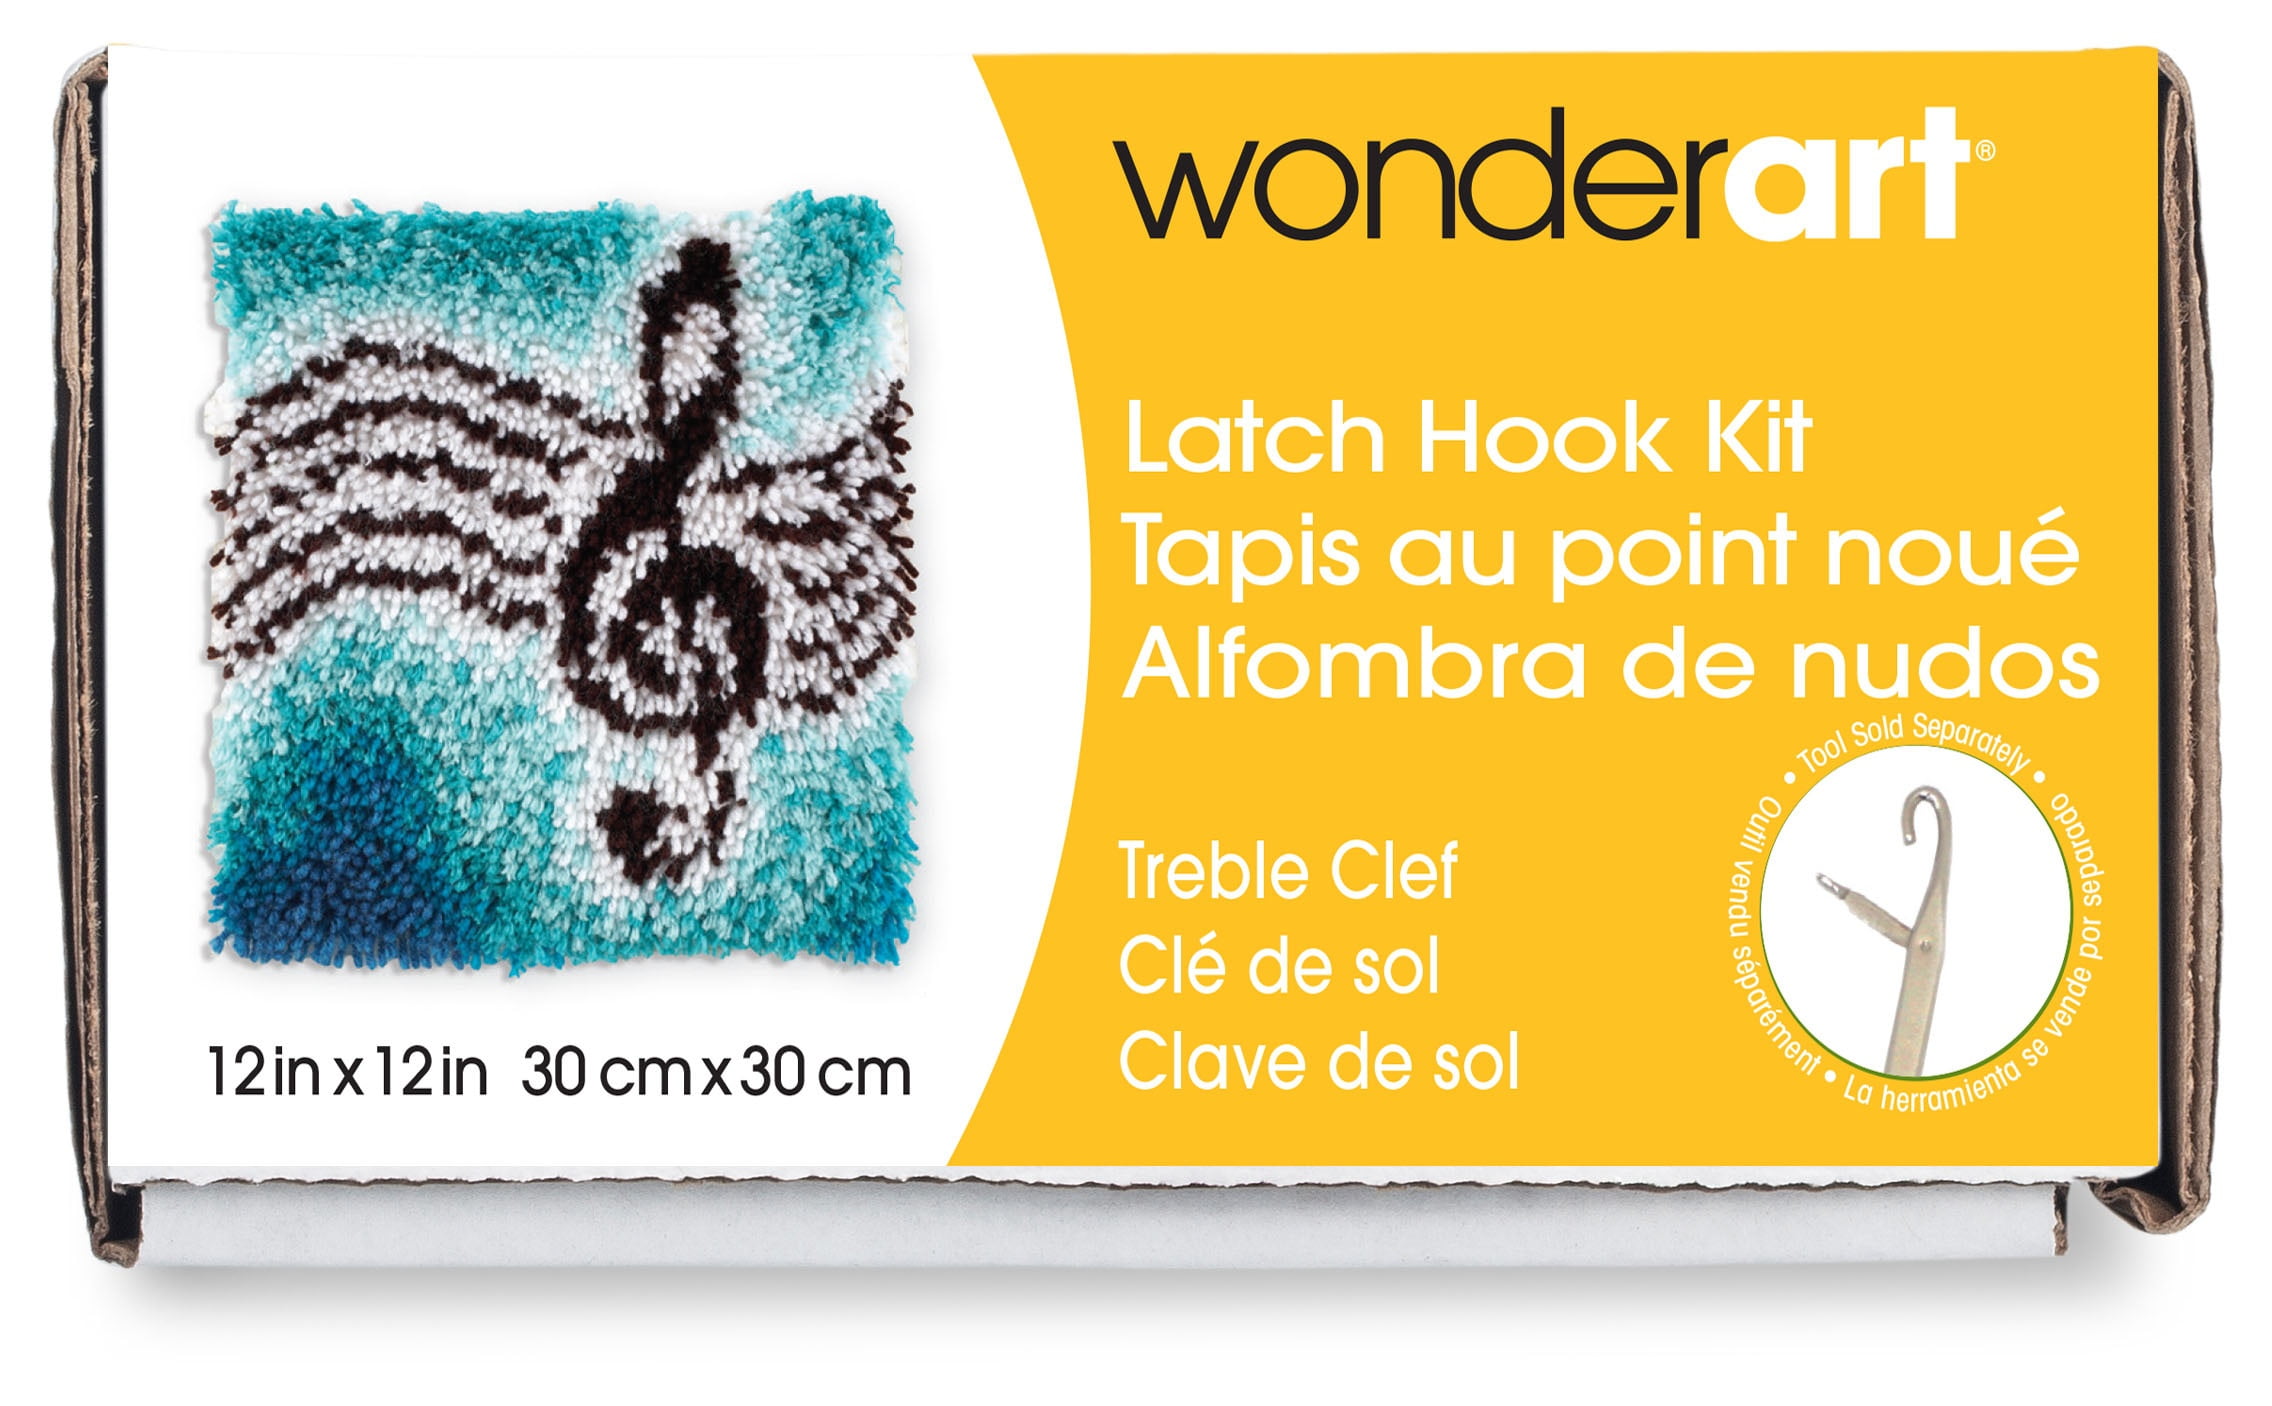 WonderArt Angel Fish 12 x 12 Latch Hook Kit, Free Shipping at